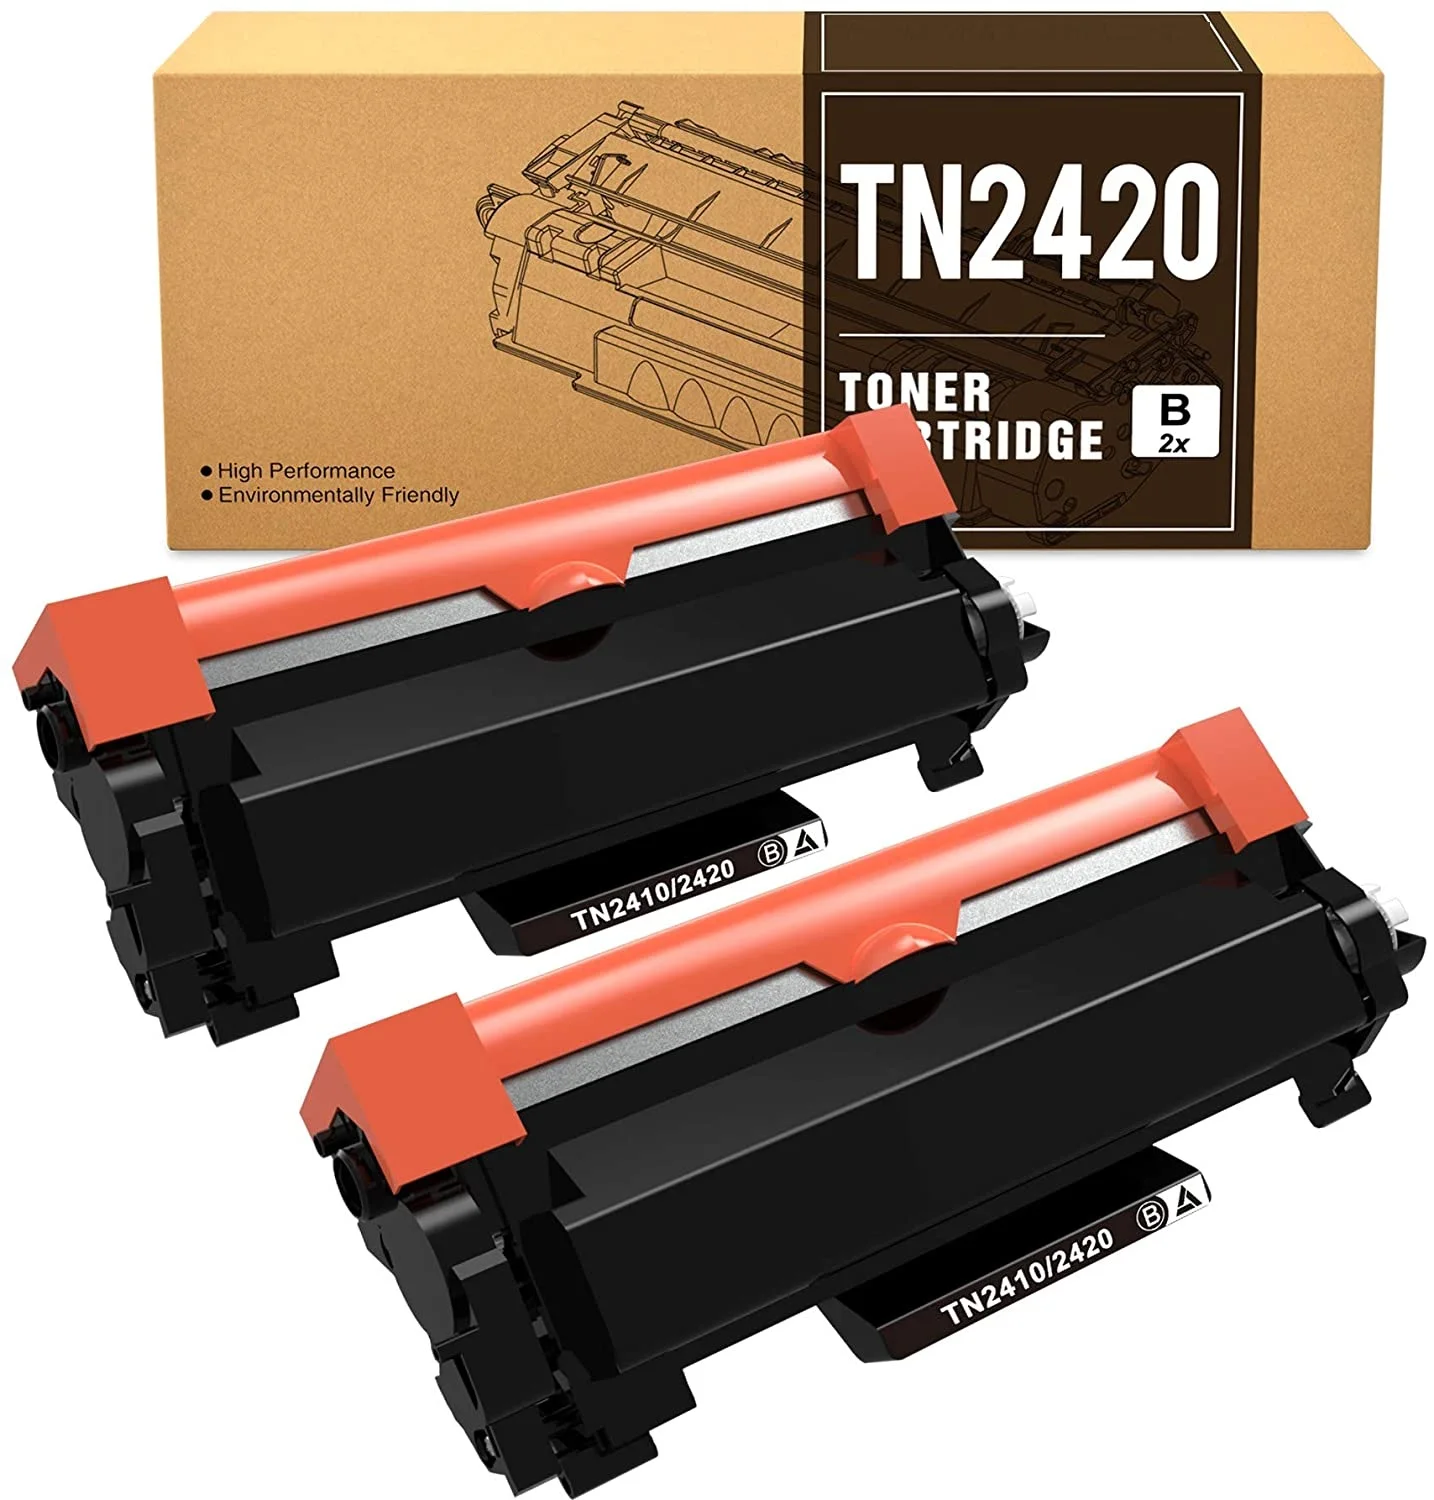 TN 2420 Toner Compatible No Original TN2420 for Brother mfc